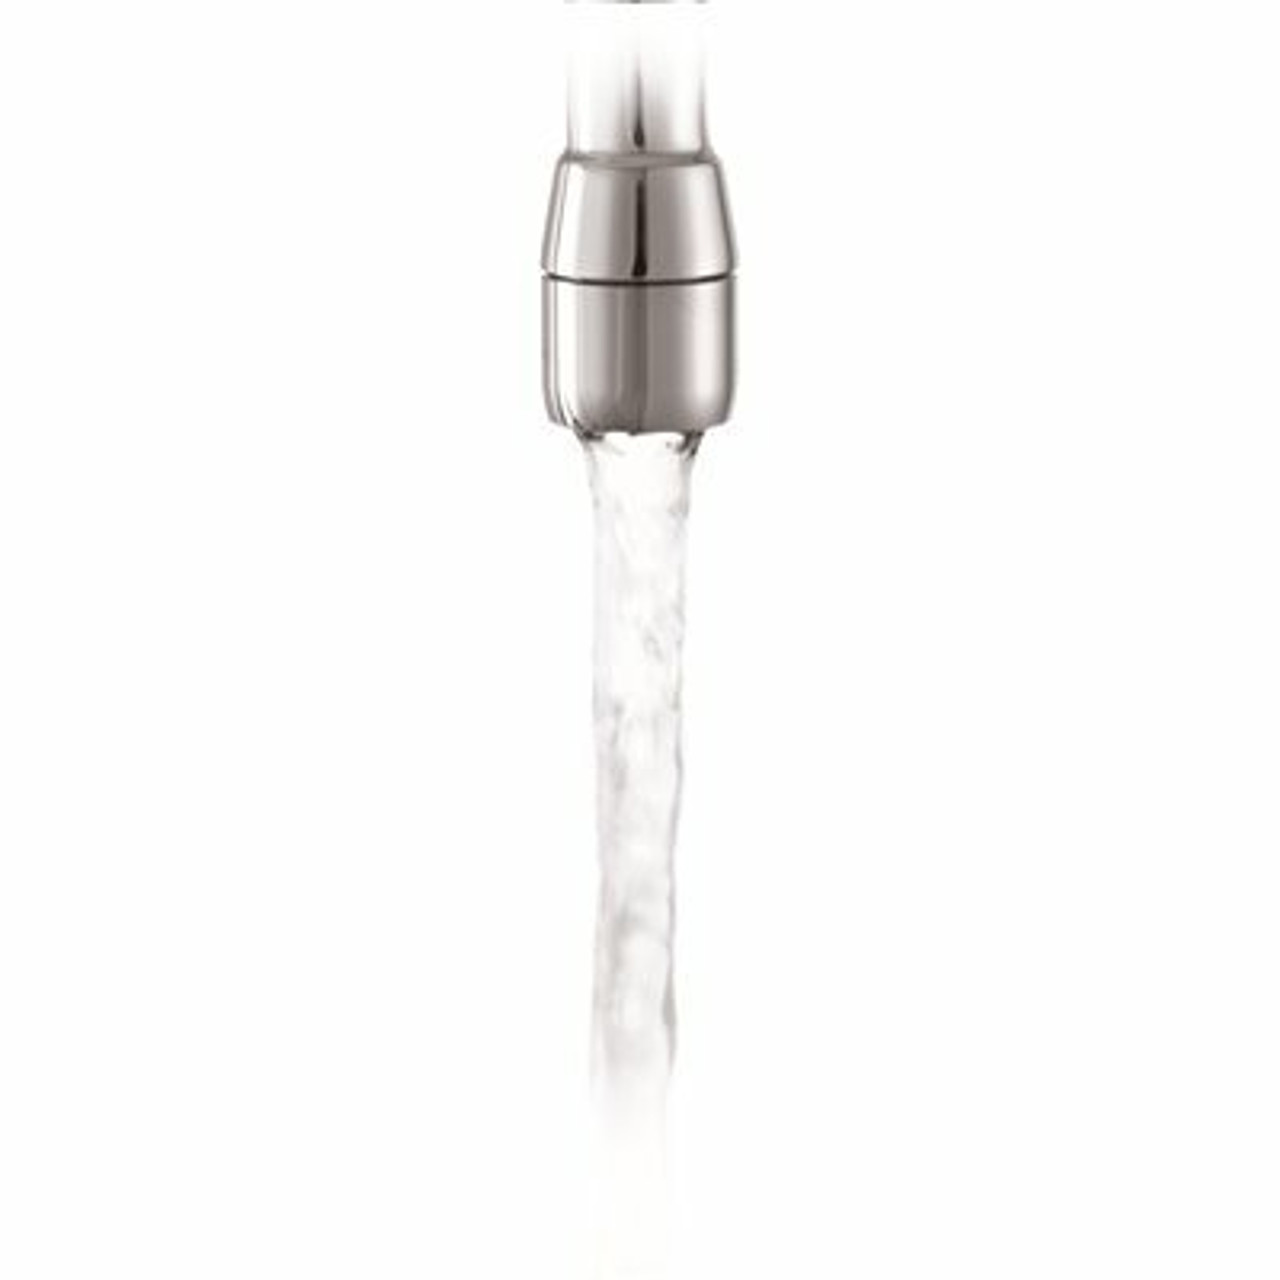 Moen Commercial 1/2 In. Ips Connection Vacuum Breaker For Handheld Shower Faucet In Chrome